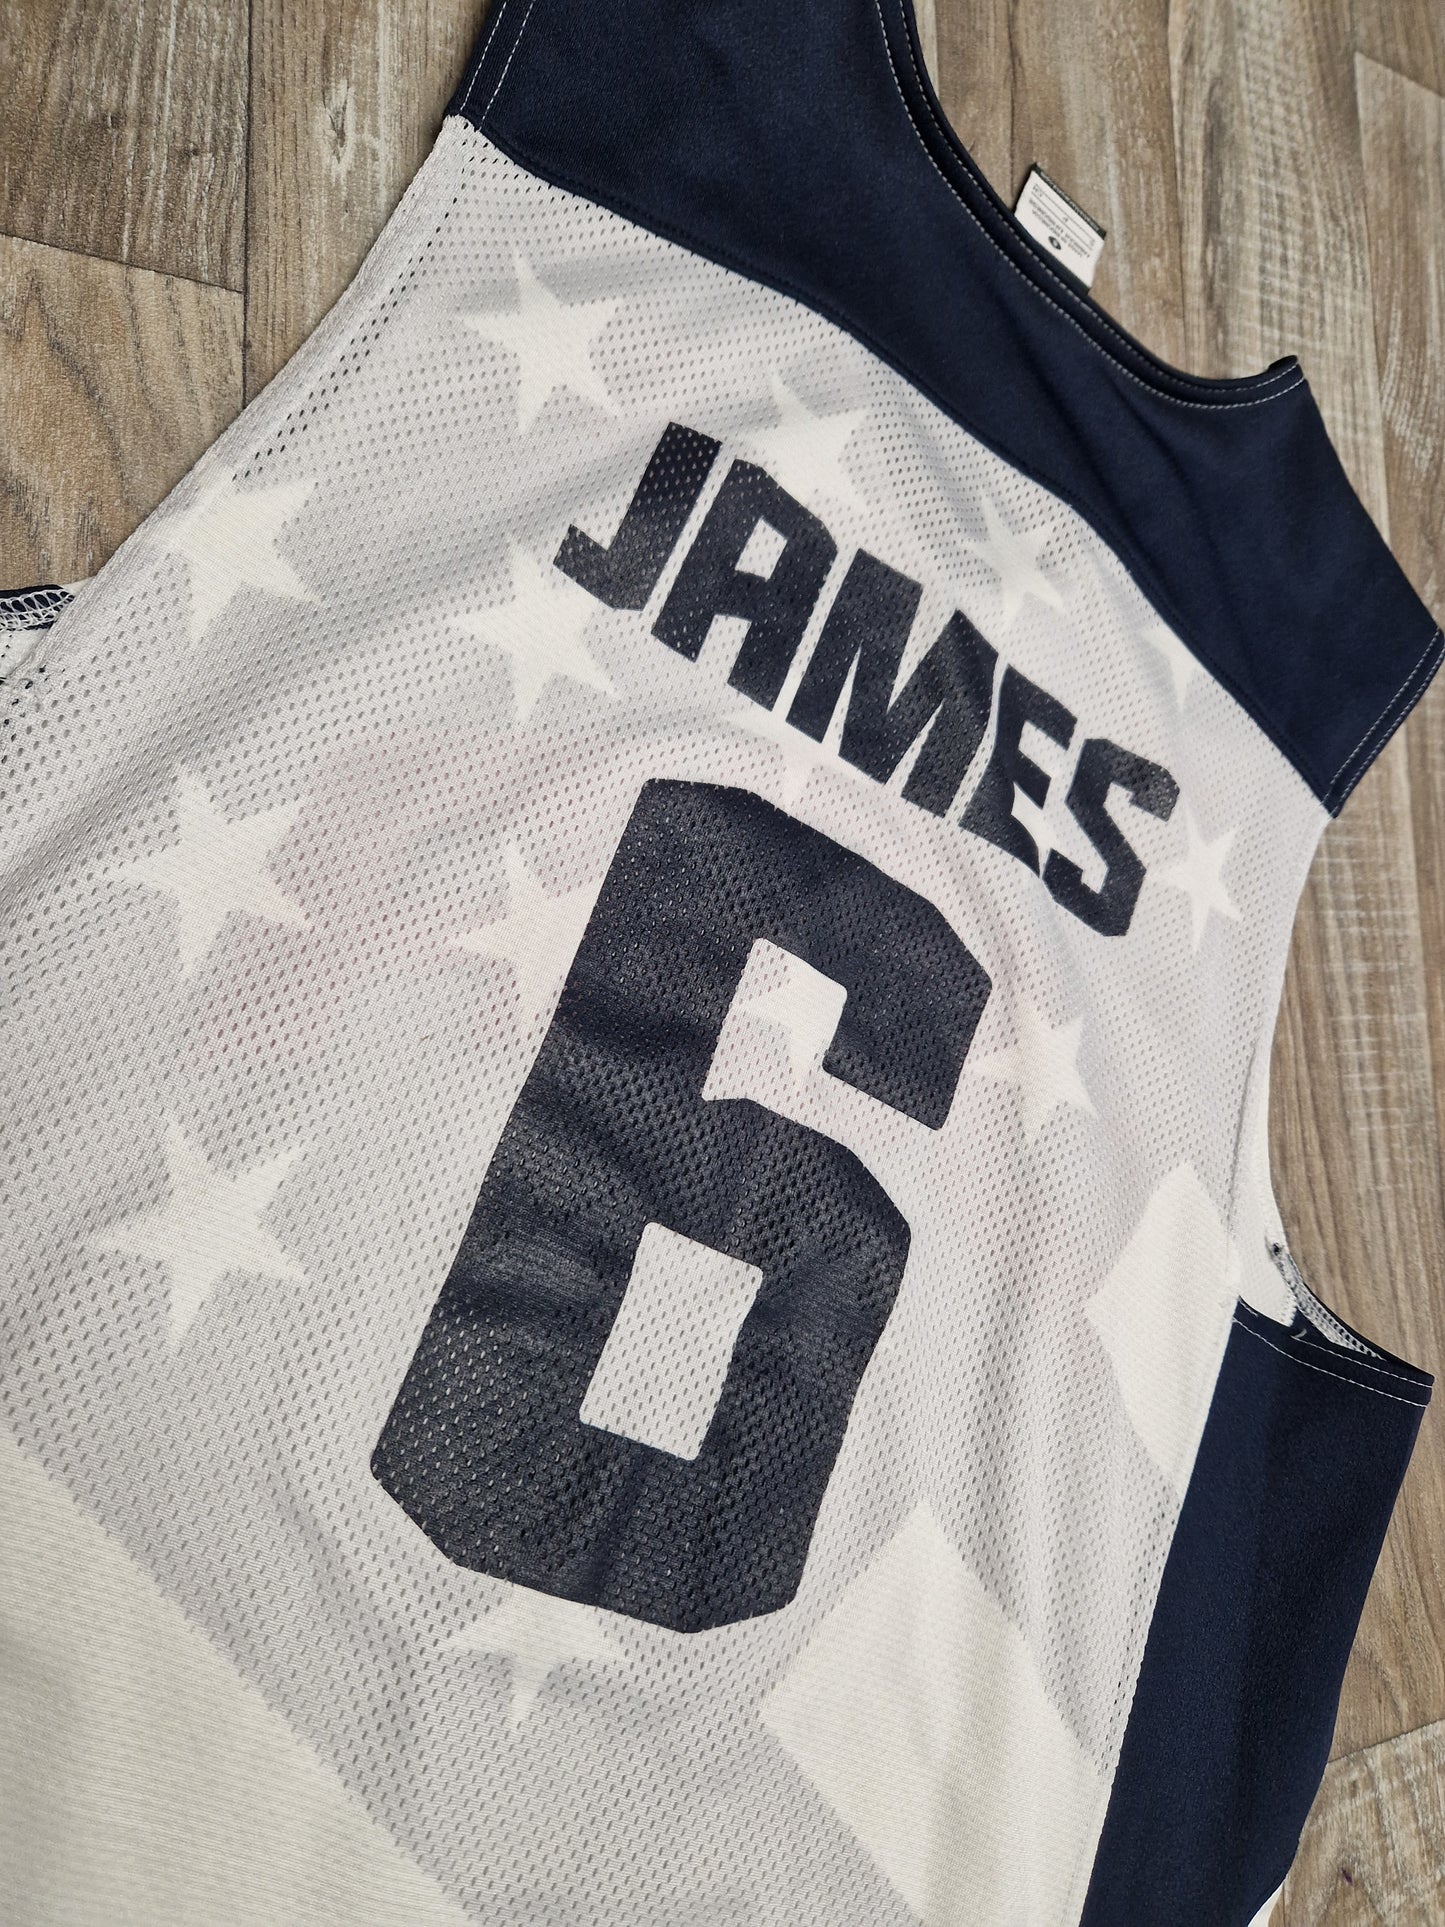 LeBron James Team USA Jersey Size Small